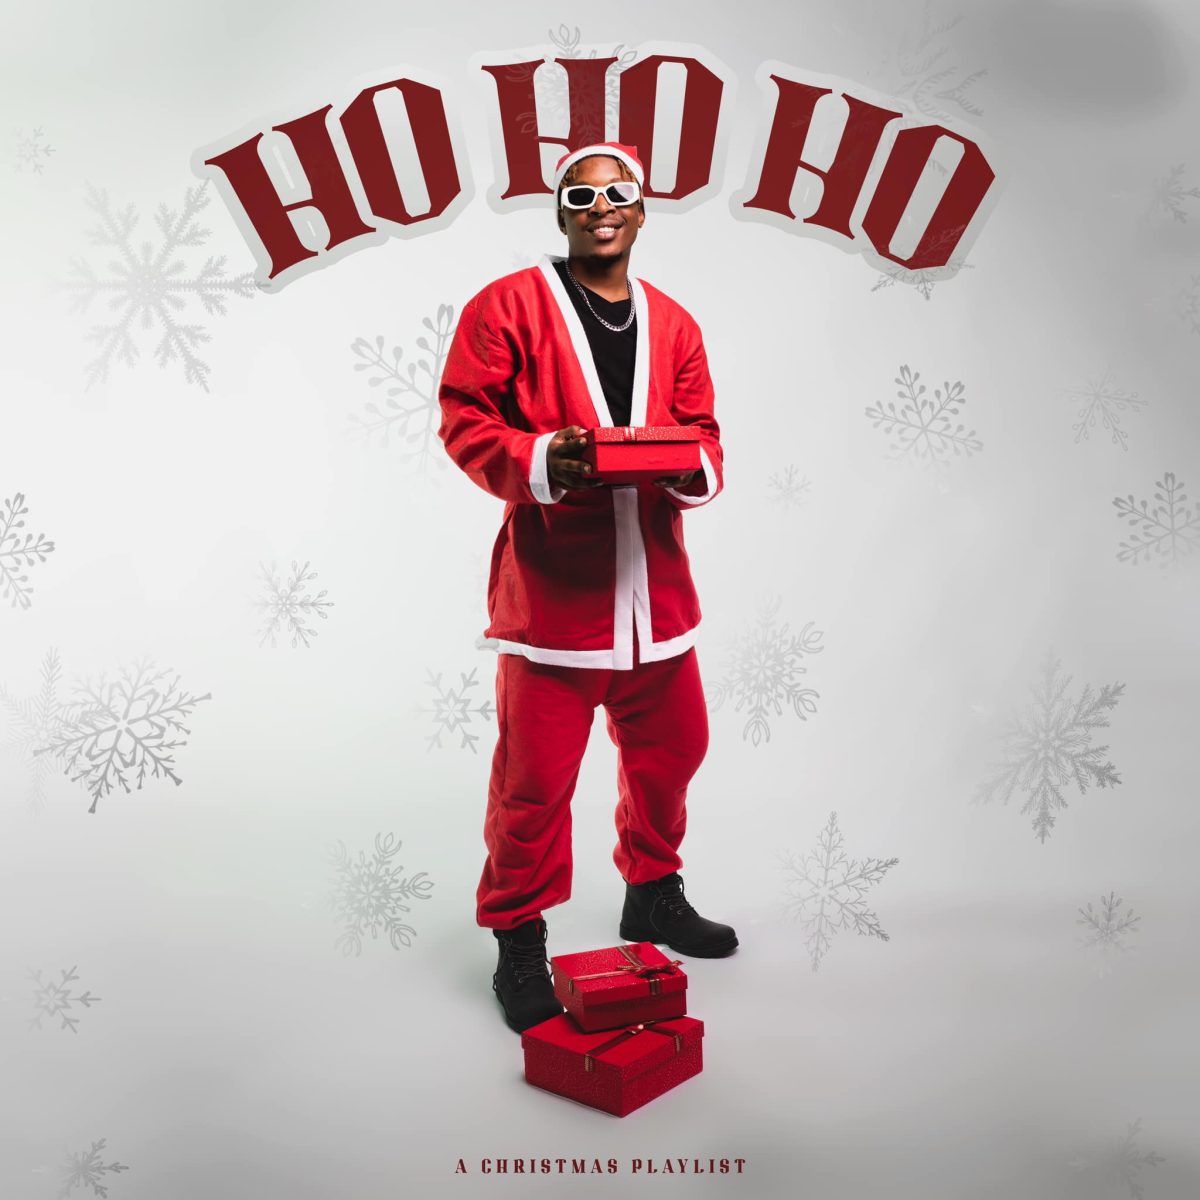 Killa - HO HO HO (A Christmas Playlist)